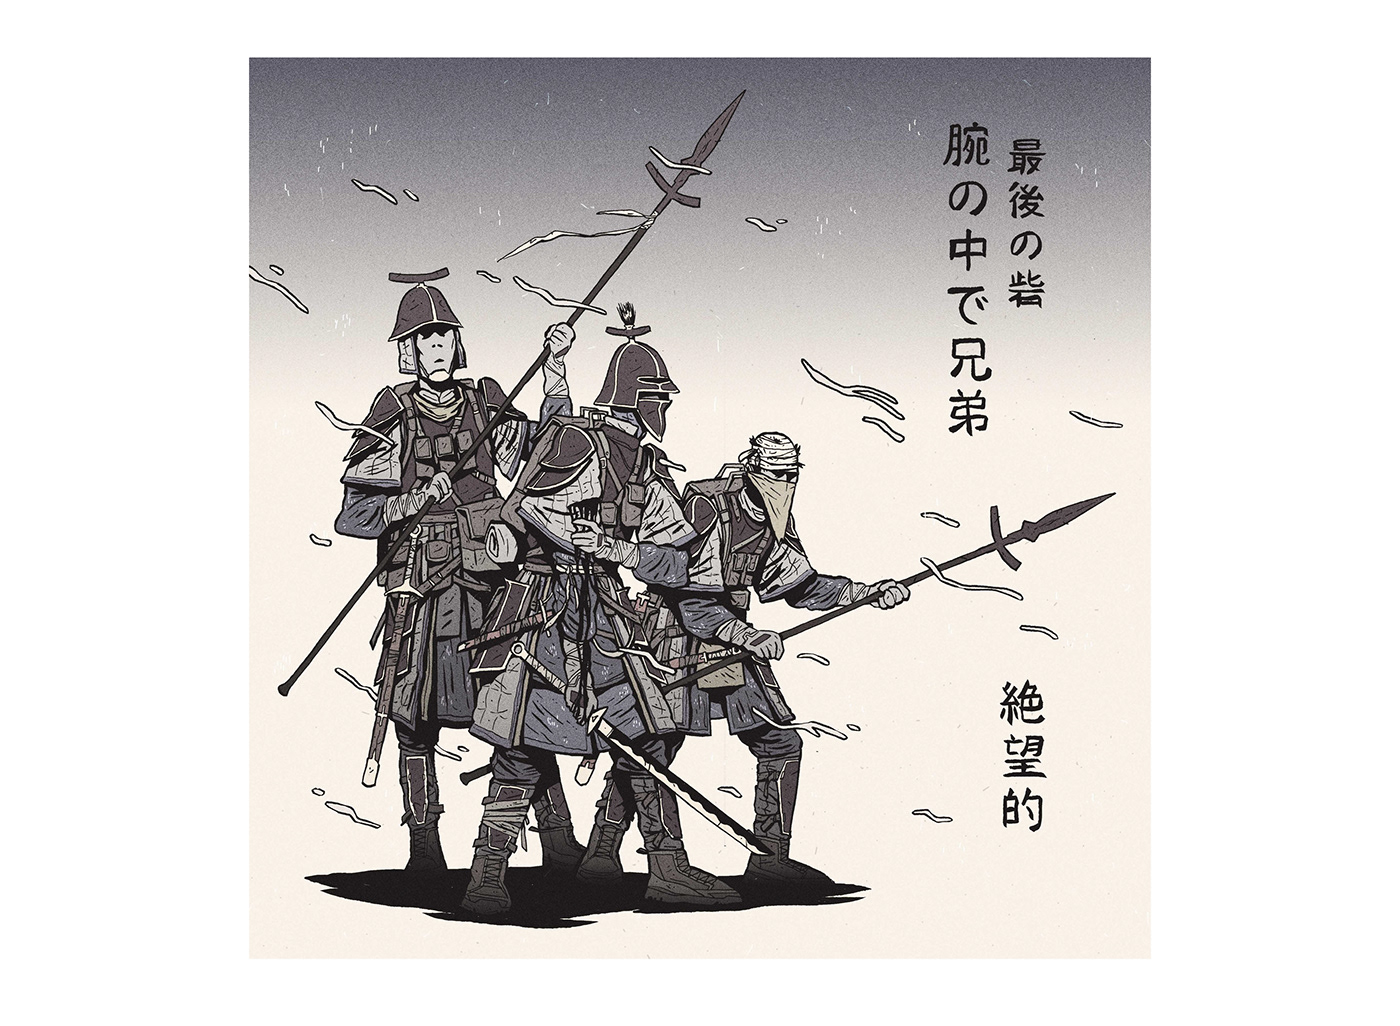 warrior knight samurai Weapon japan medieval fantasy fight